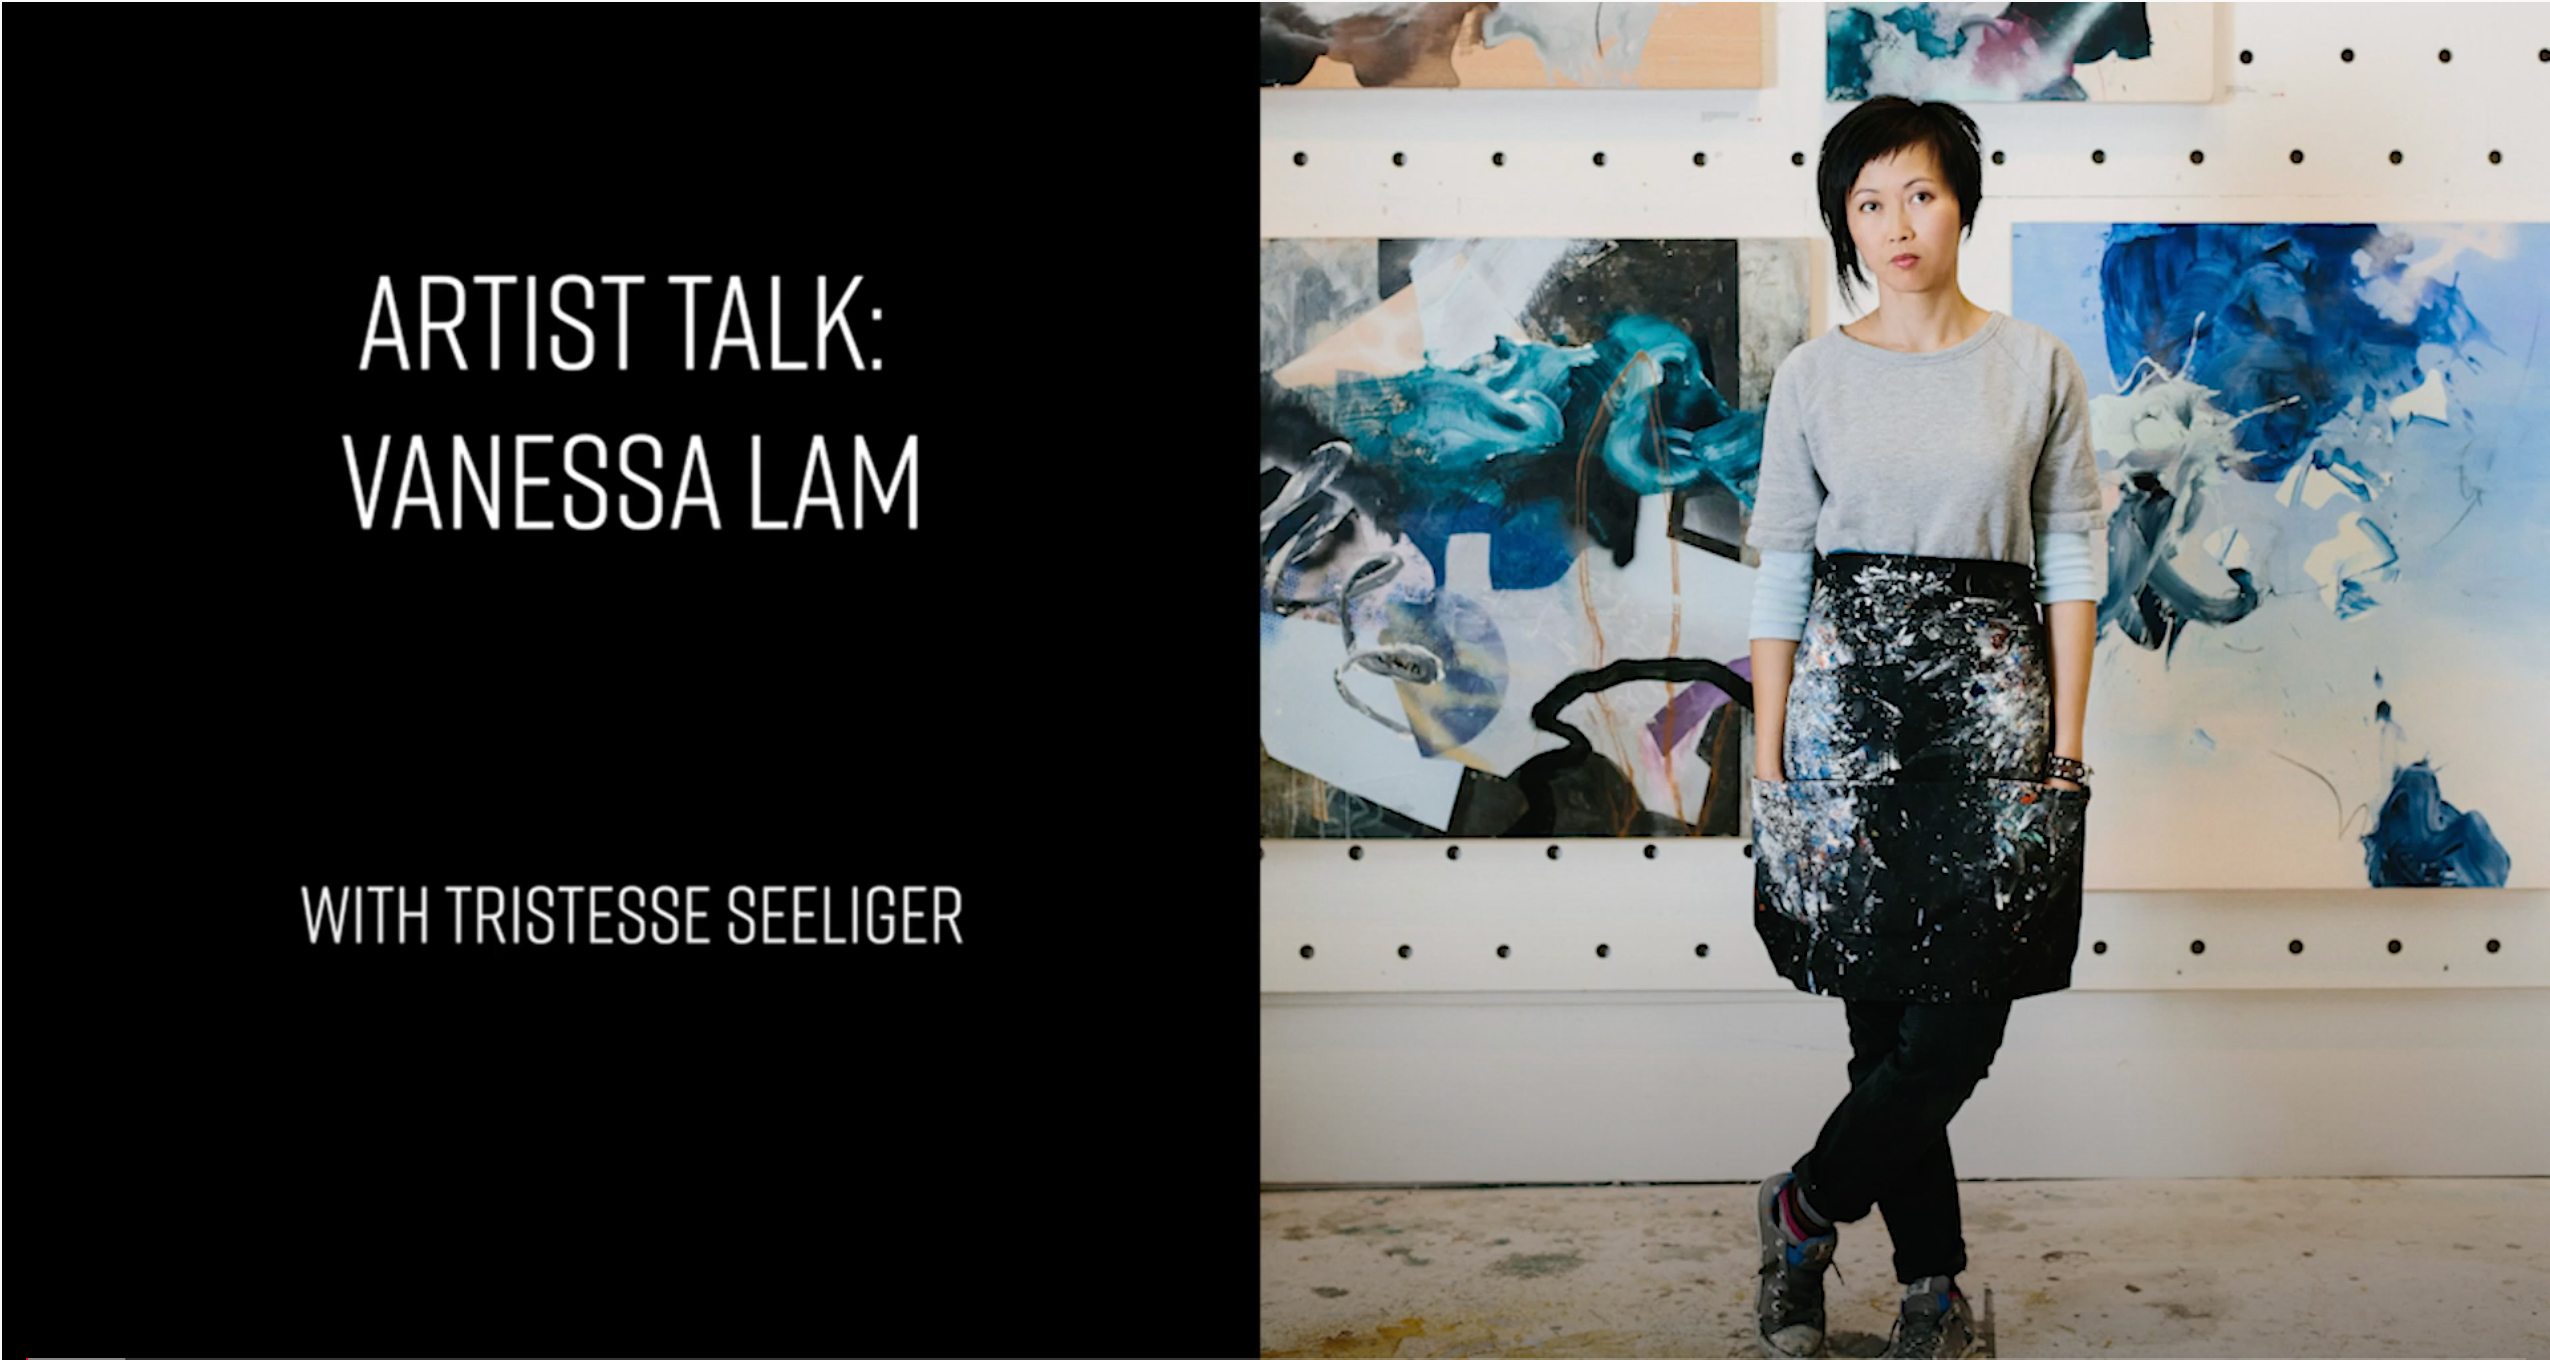 Artist Talk Video with Tristesse Seeliger